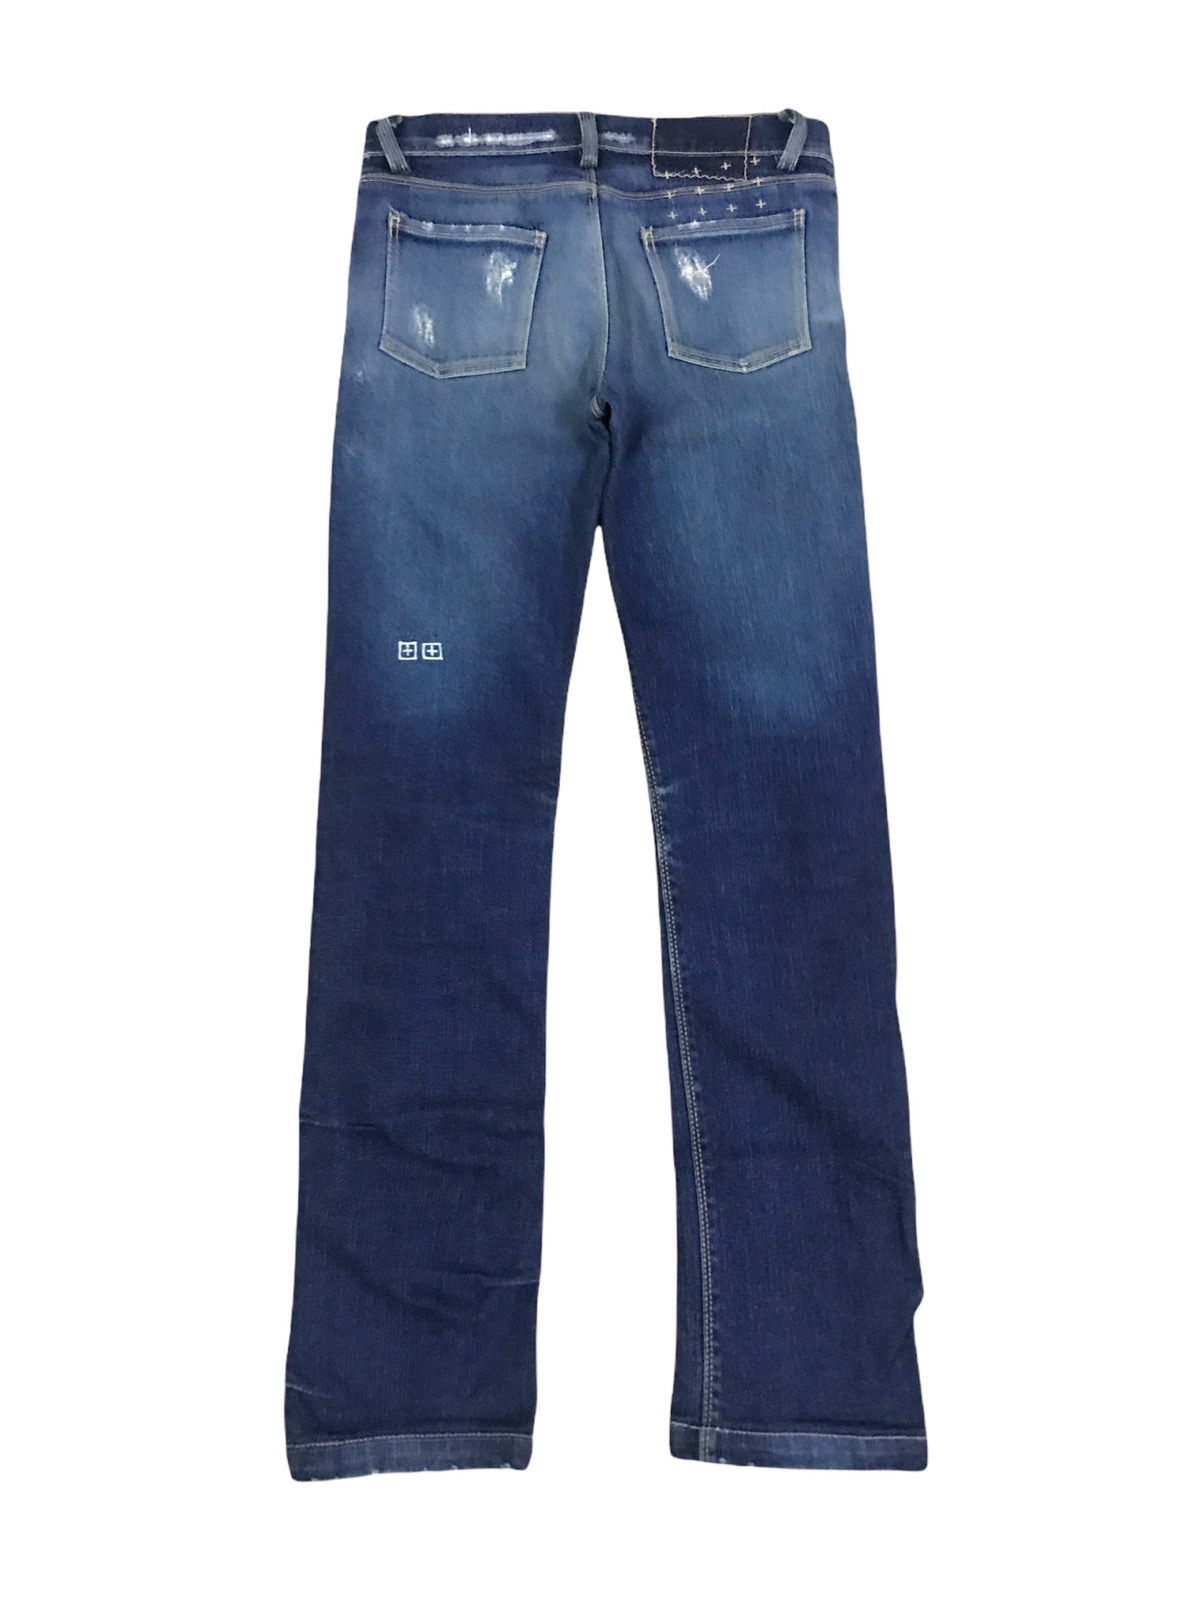 Ksubi Distressed Jeans - 1